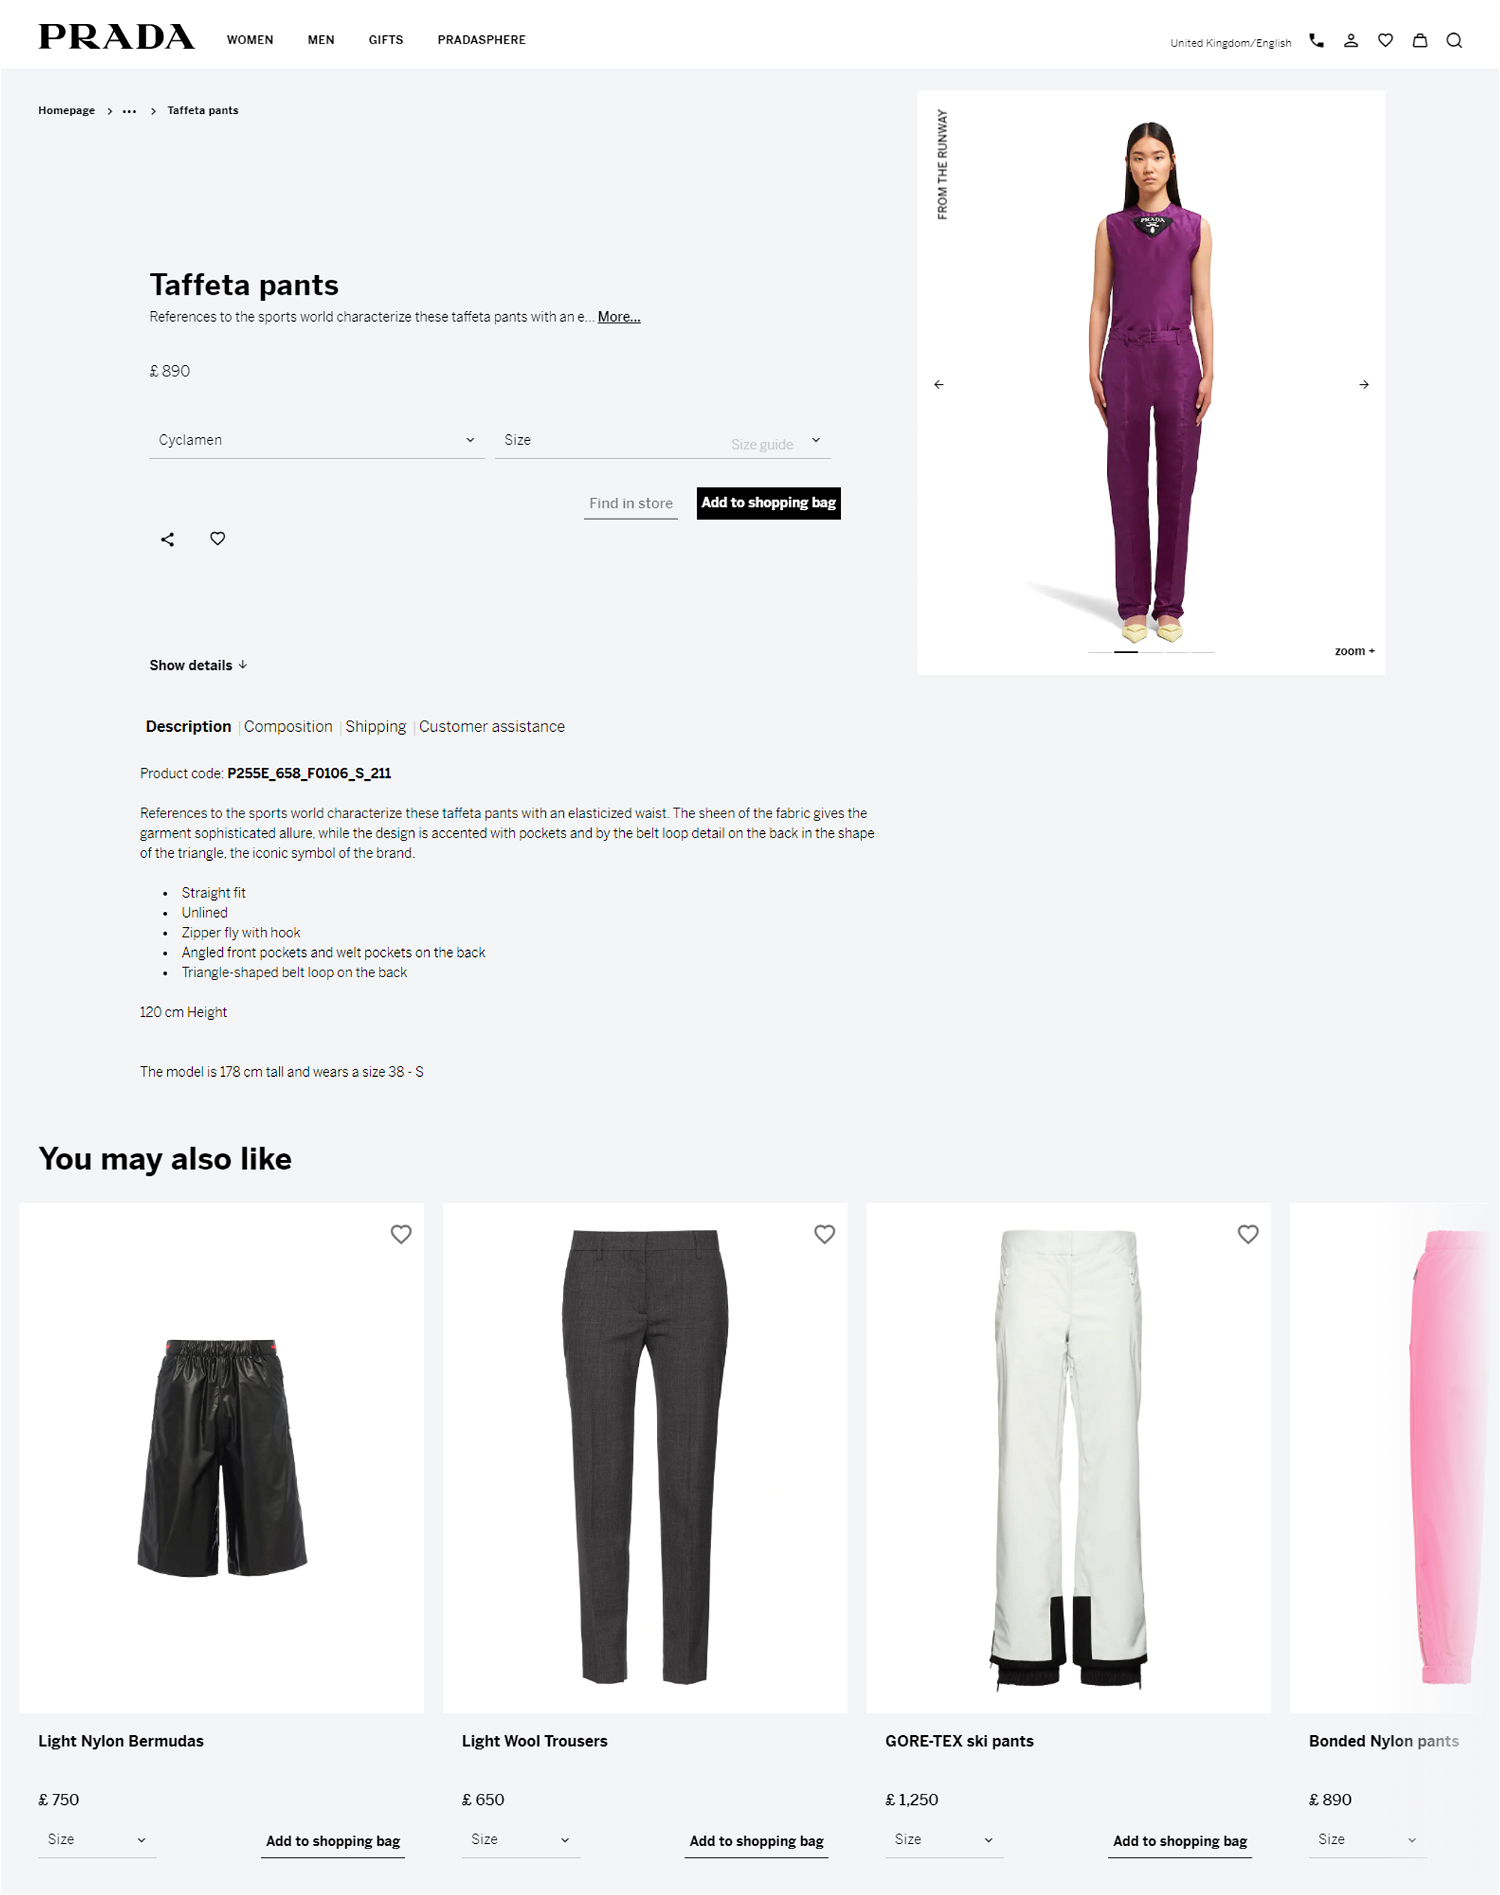 Prada's desktop product page